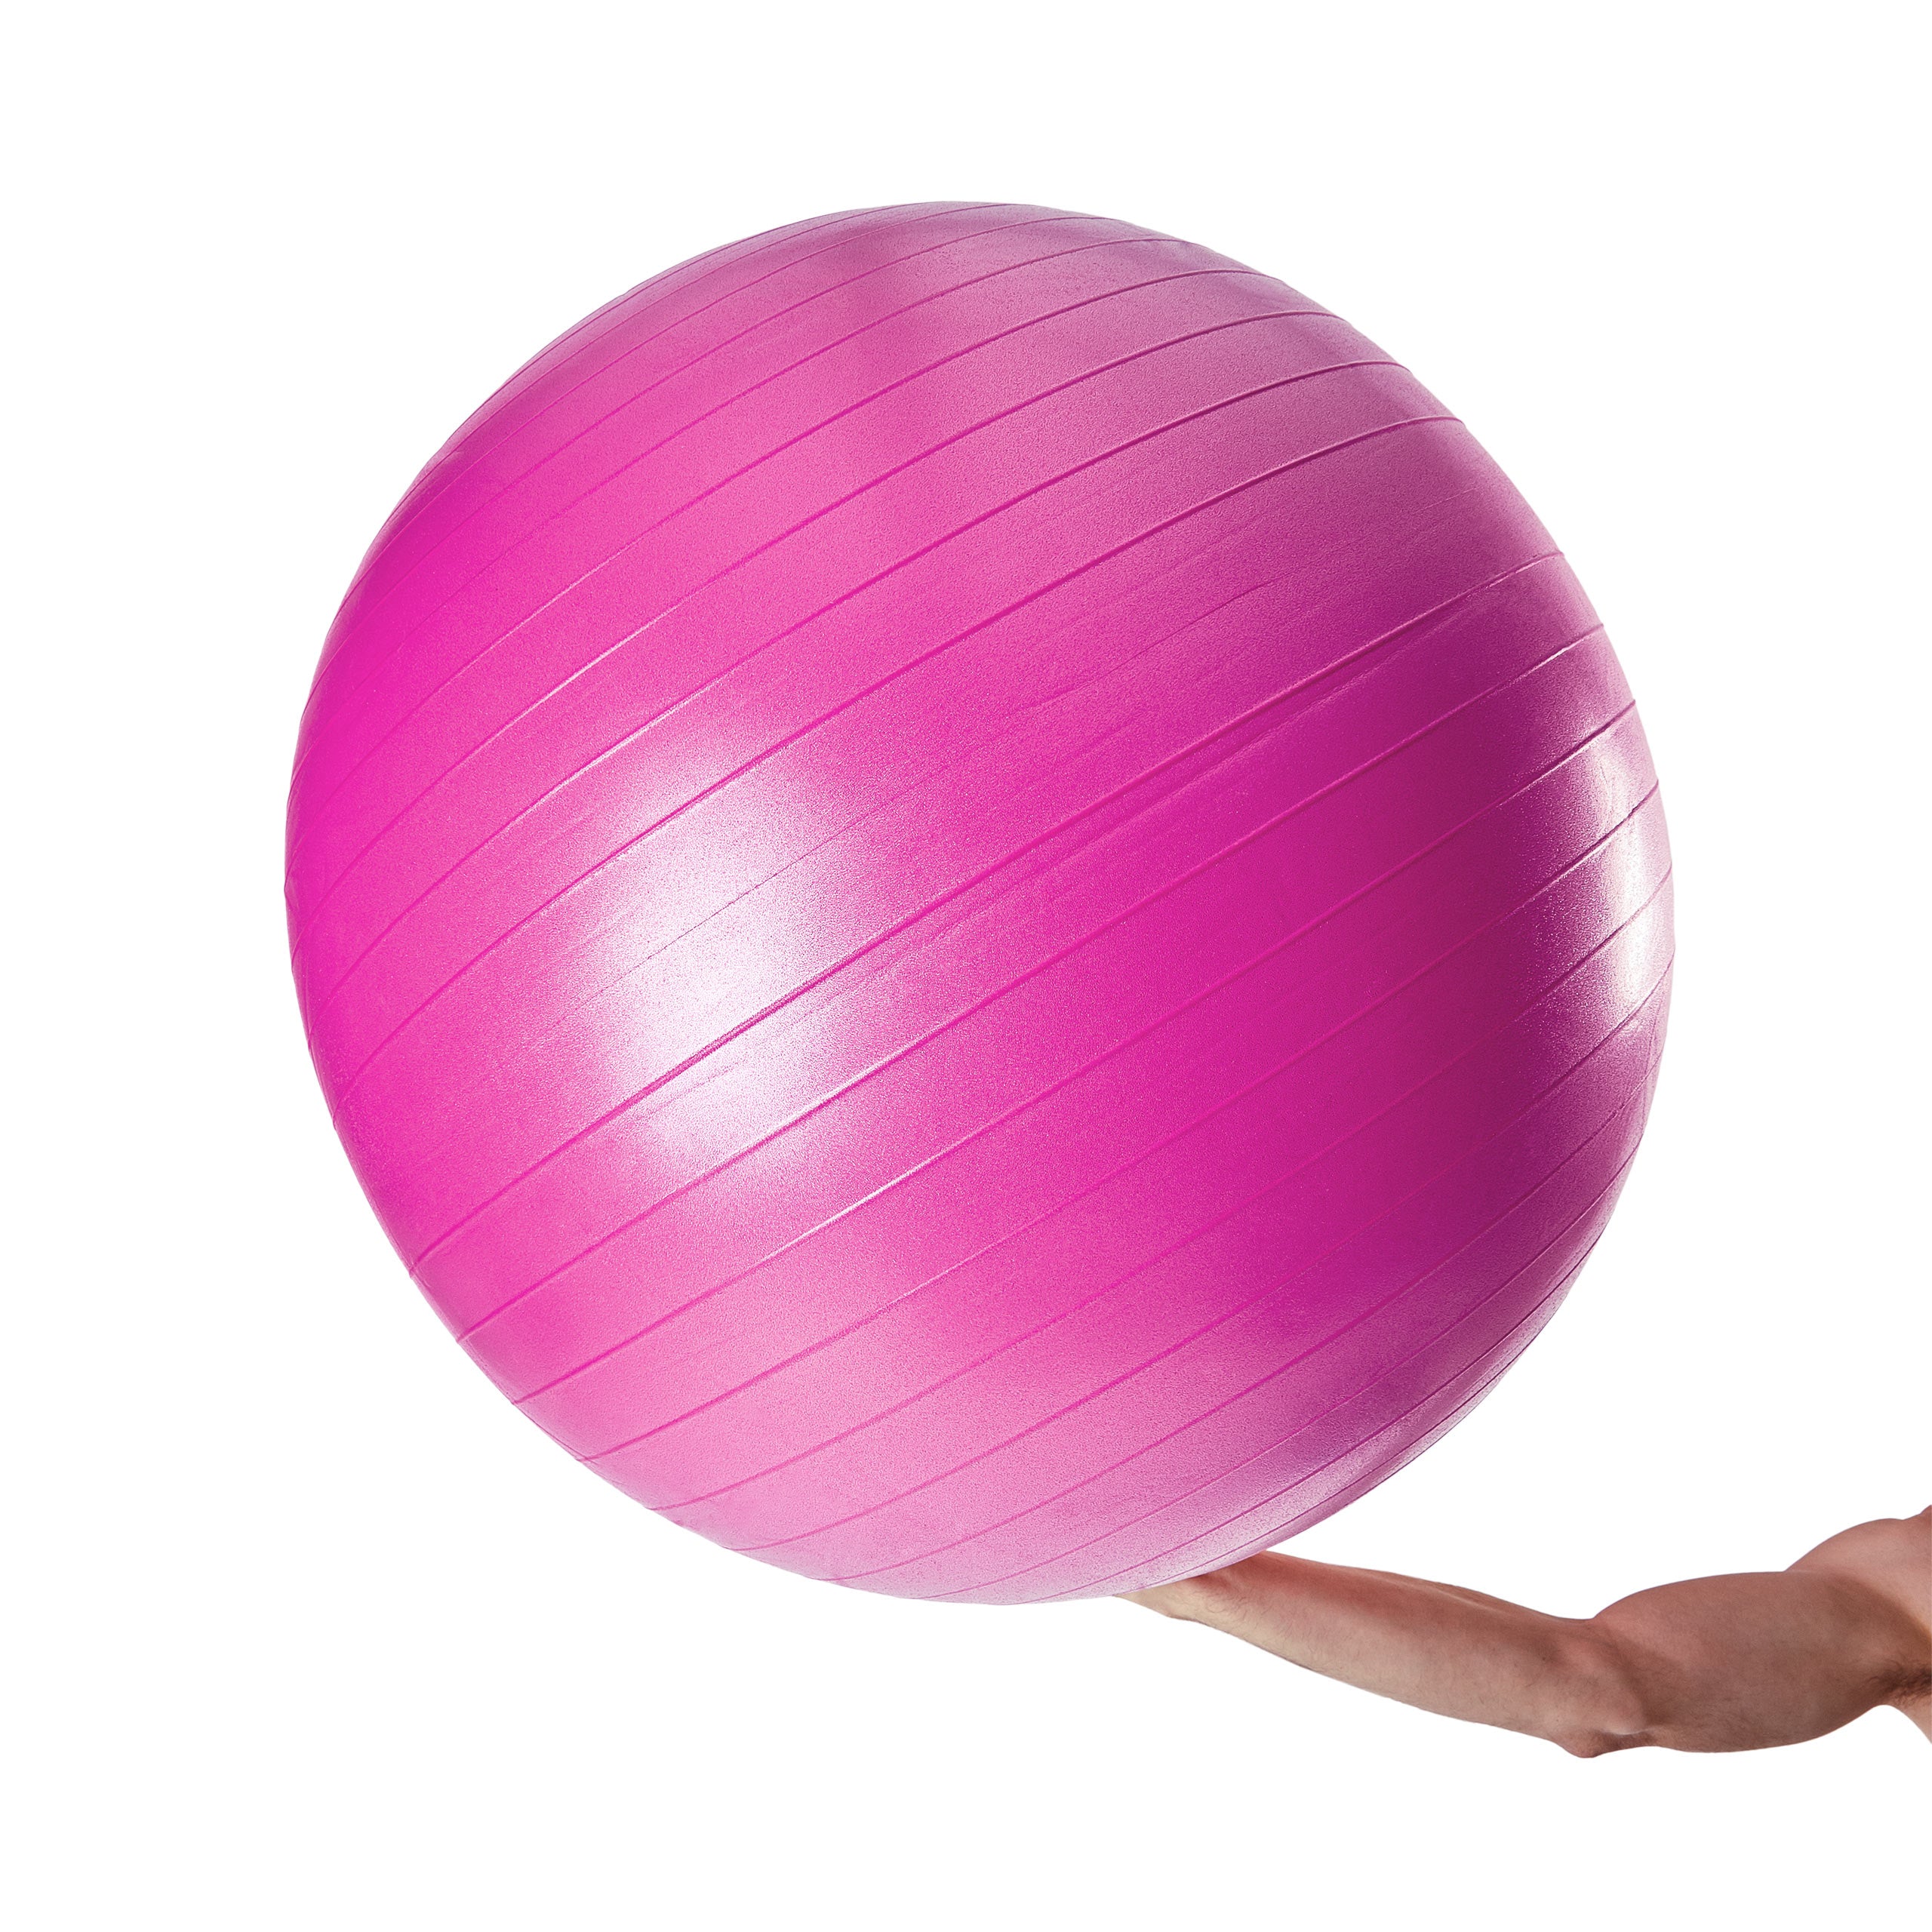 Gymnastikball inkl. Ballpumpe - Fitness Sitzball - Pink - 65 cm